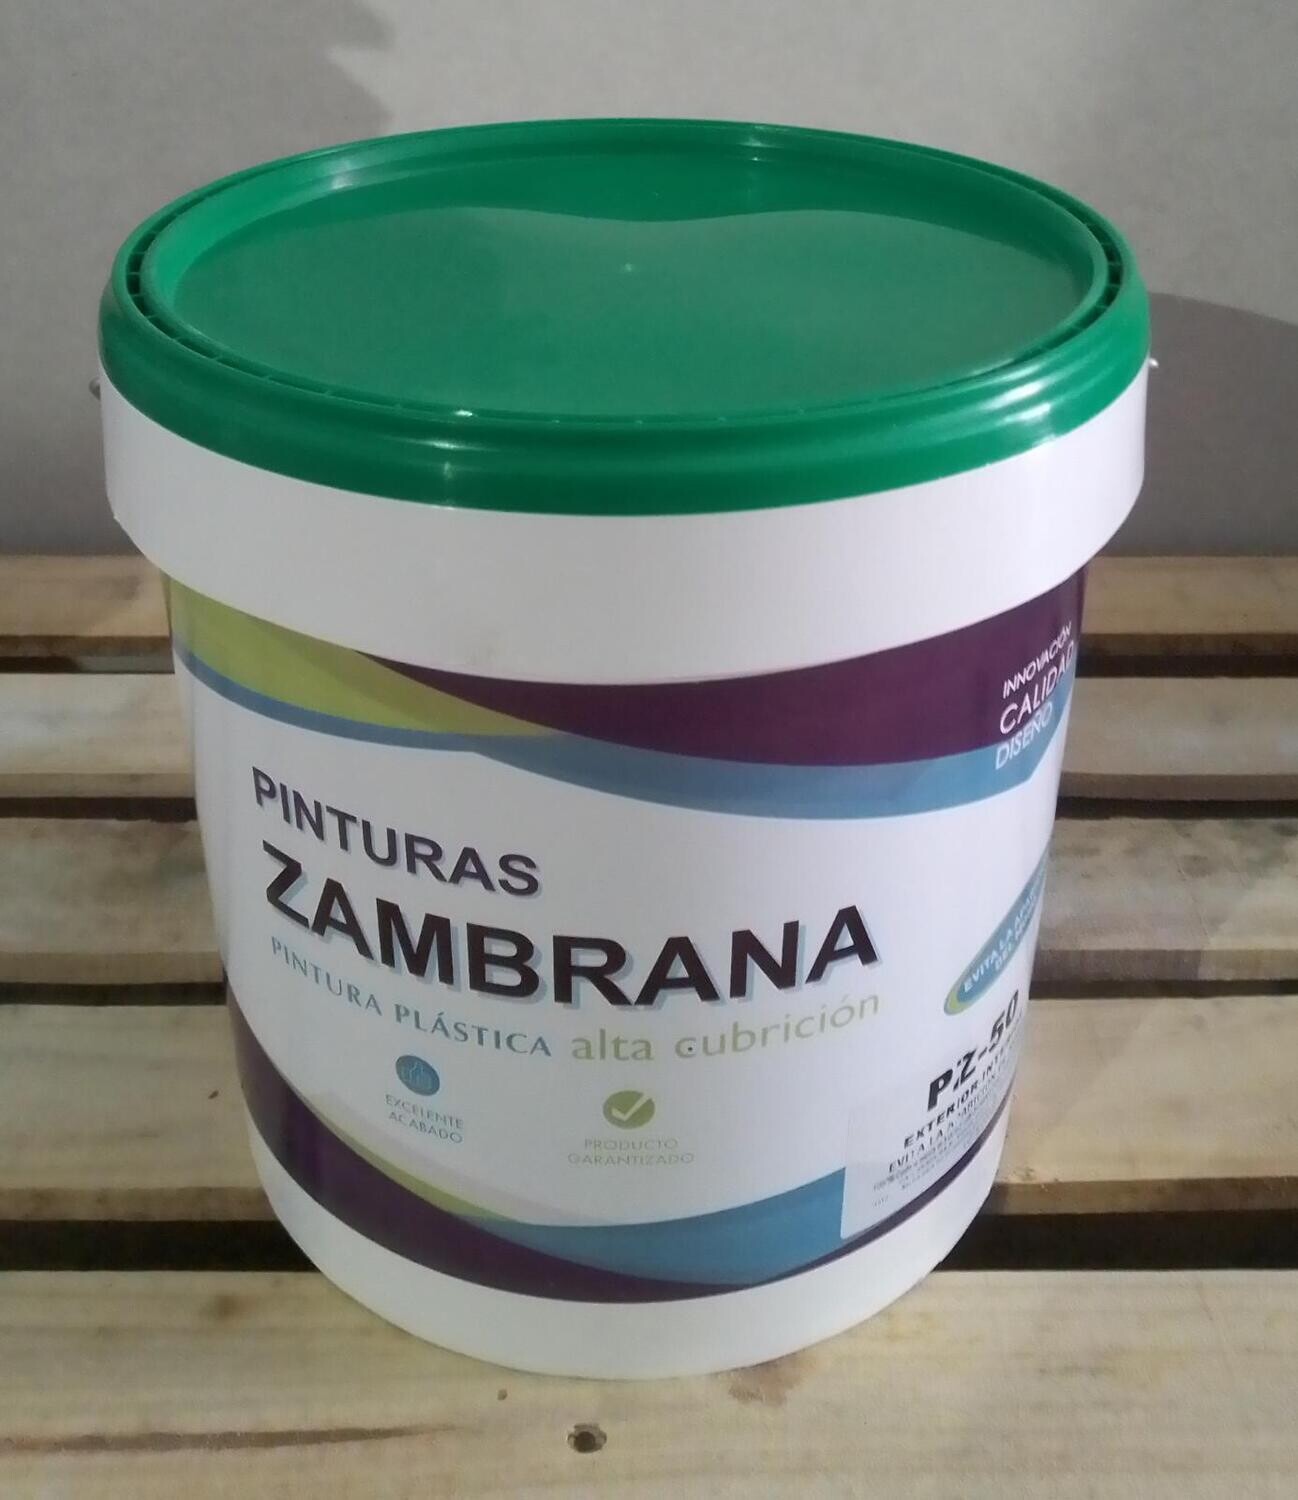 PINTURA ZAMBRANA -Pintura plastica alta cubrición